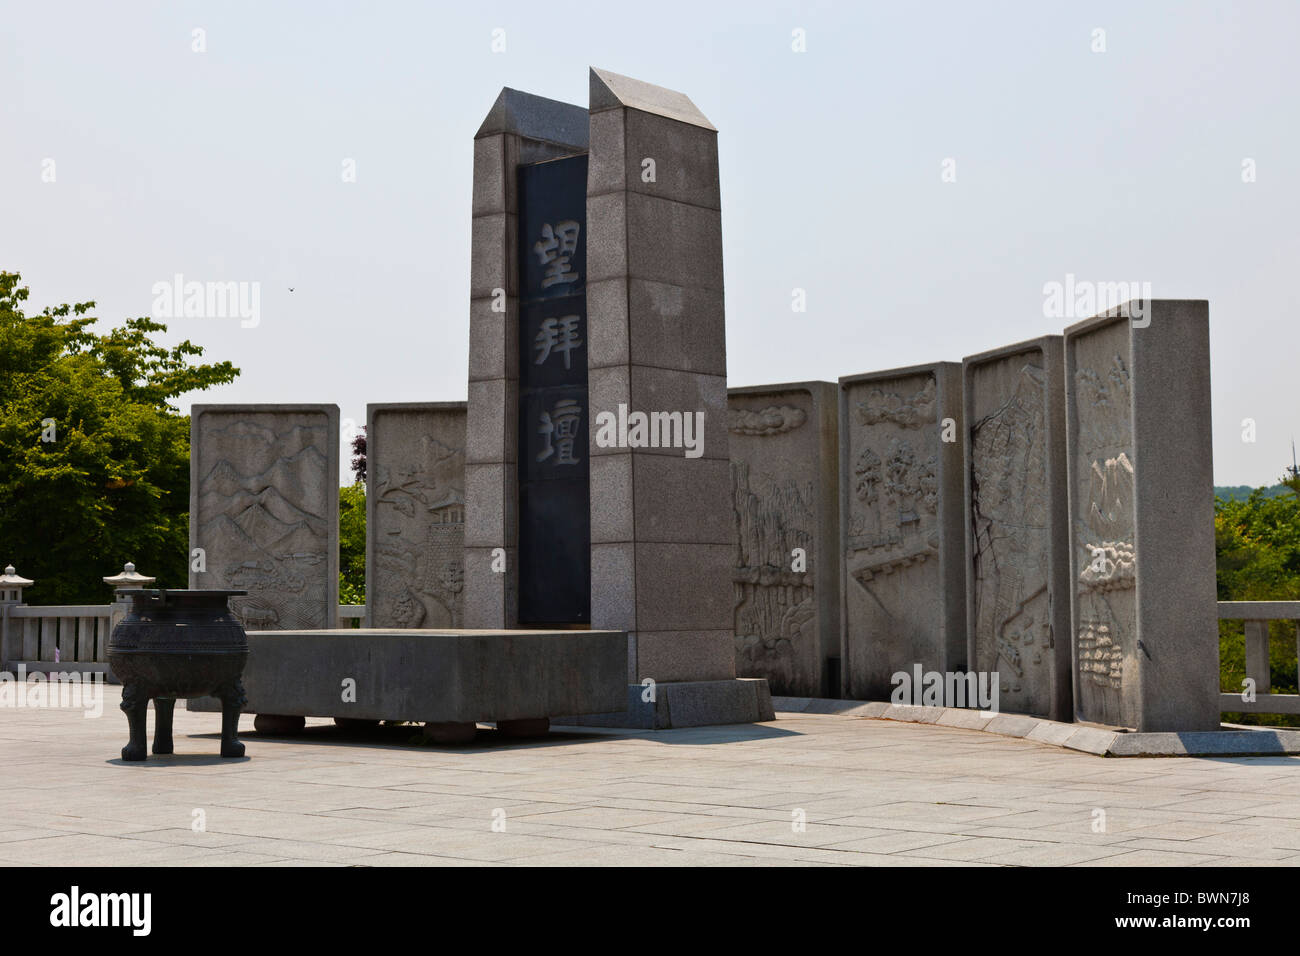 Mangbaedan Memorial Altar near Freedom Bridge, DMZ Demilitarized Zone, South Korea. JMH3818 Stock Photo